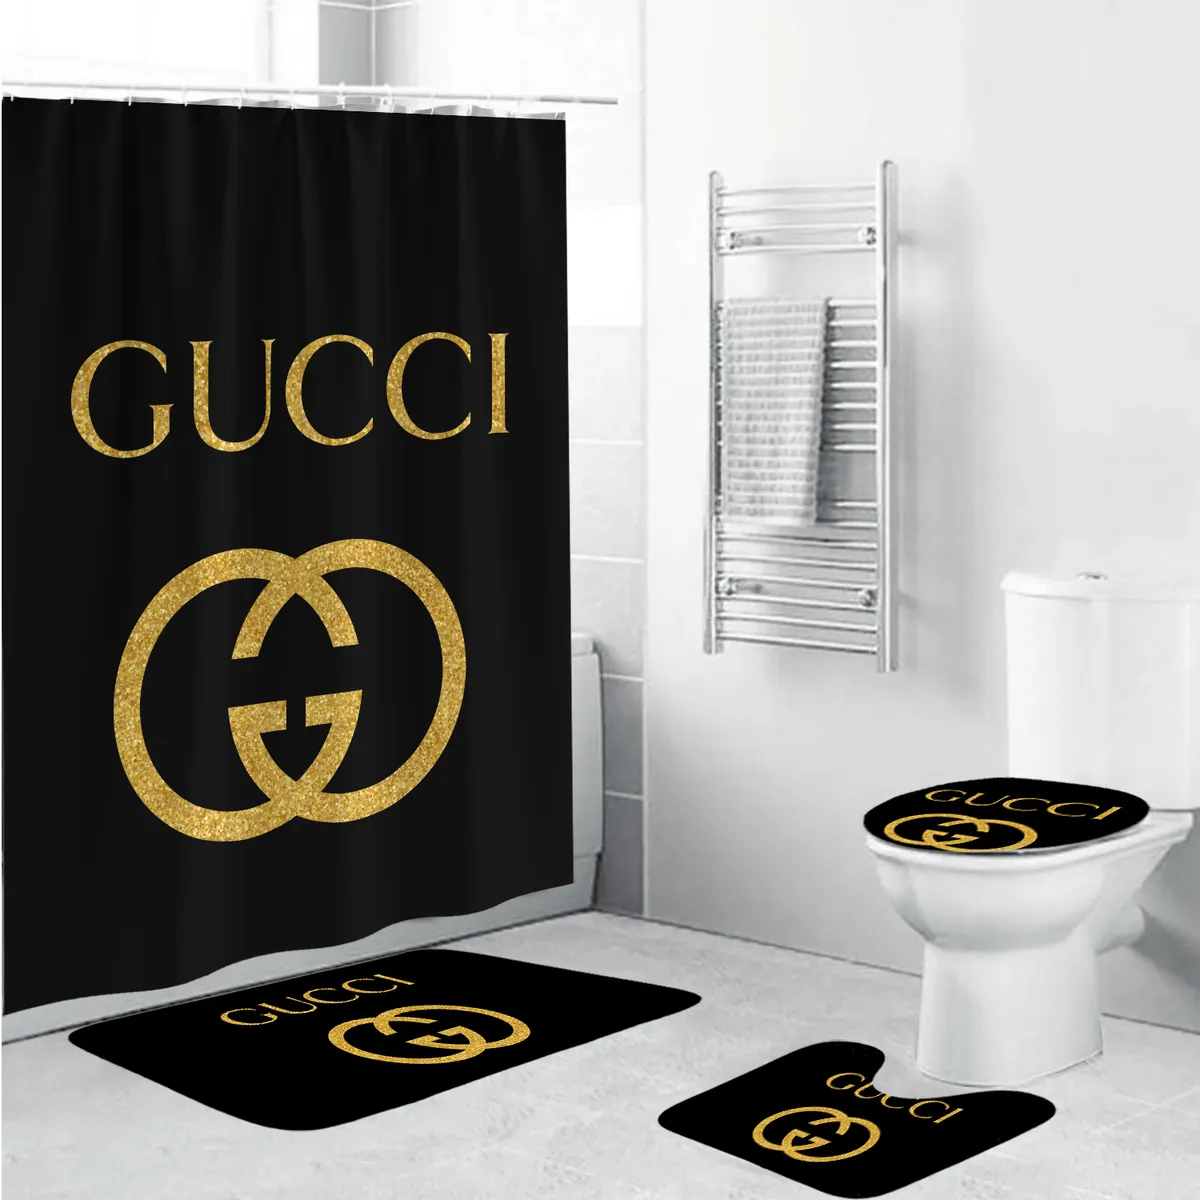 Gucci Black Golden Bathroom Set Home Decor Bath Mat Hypebeast Luxury Fashion Brand